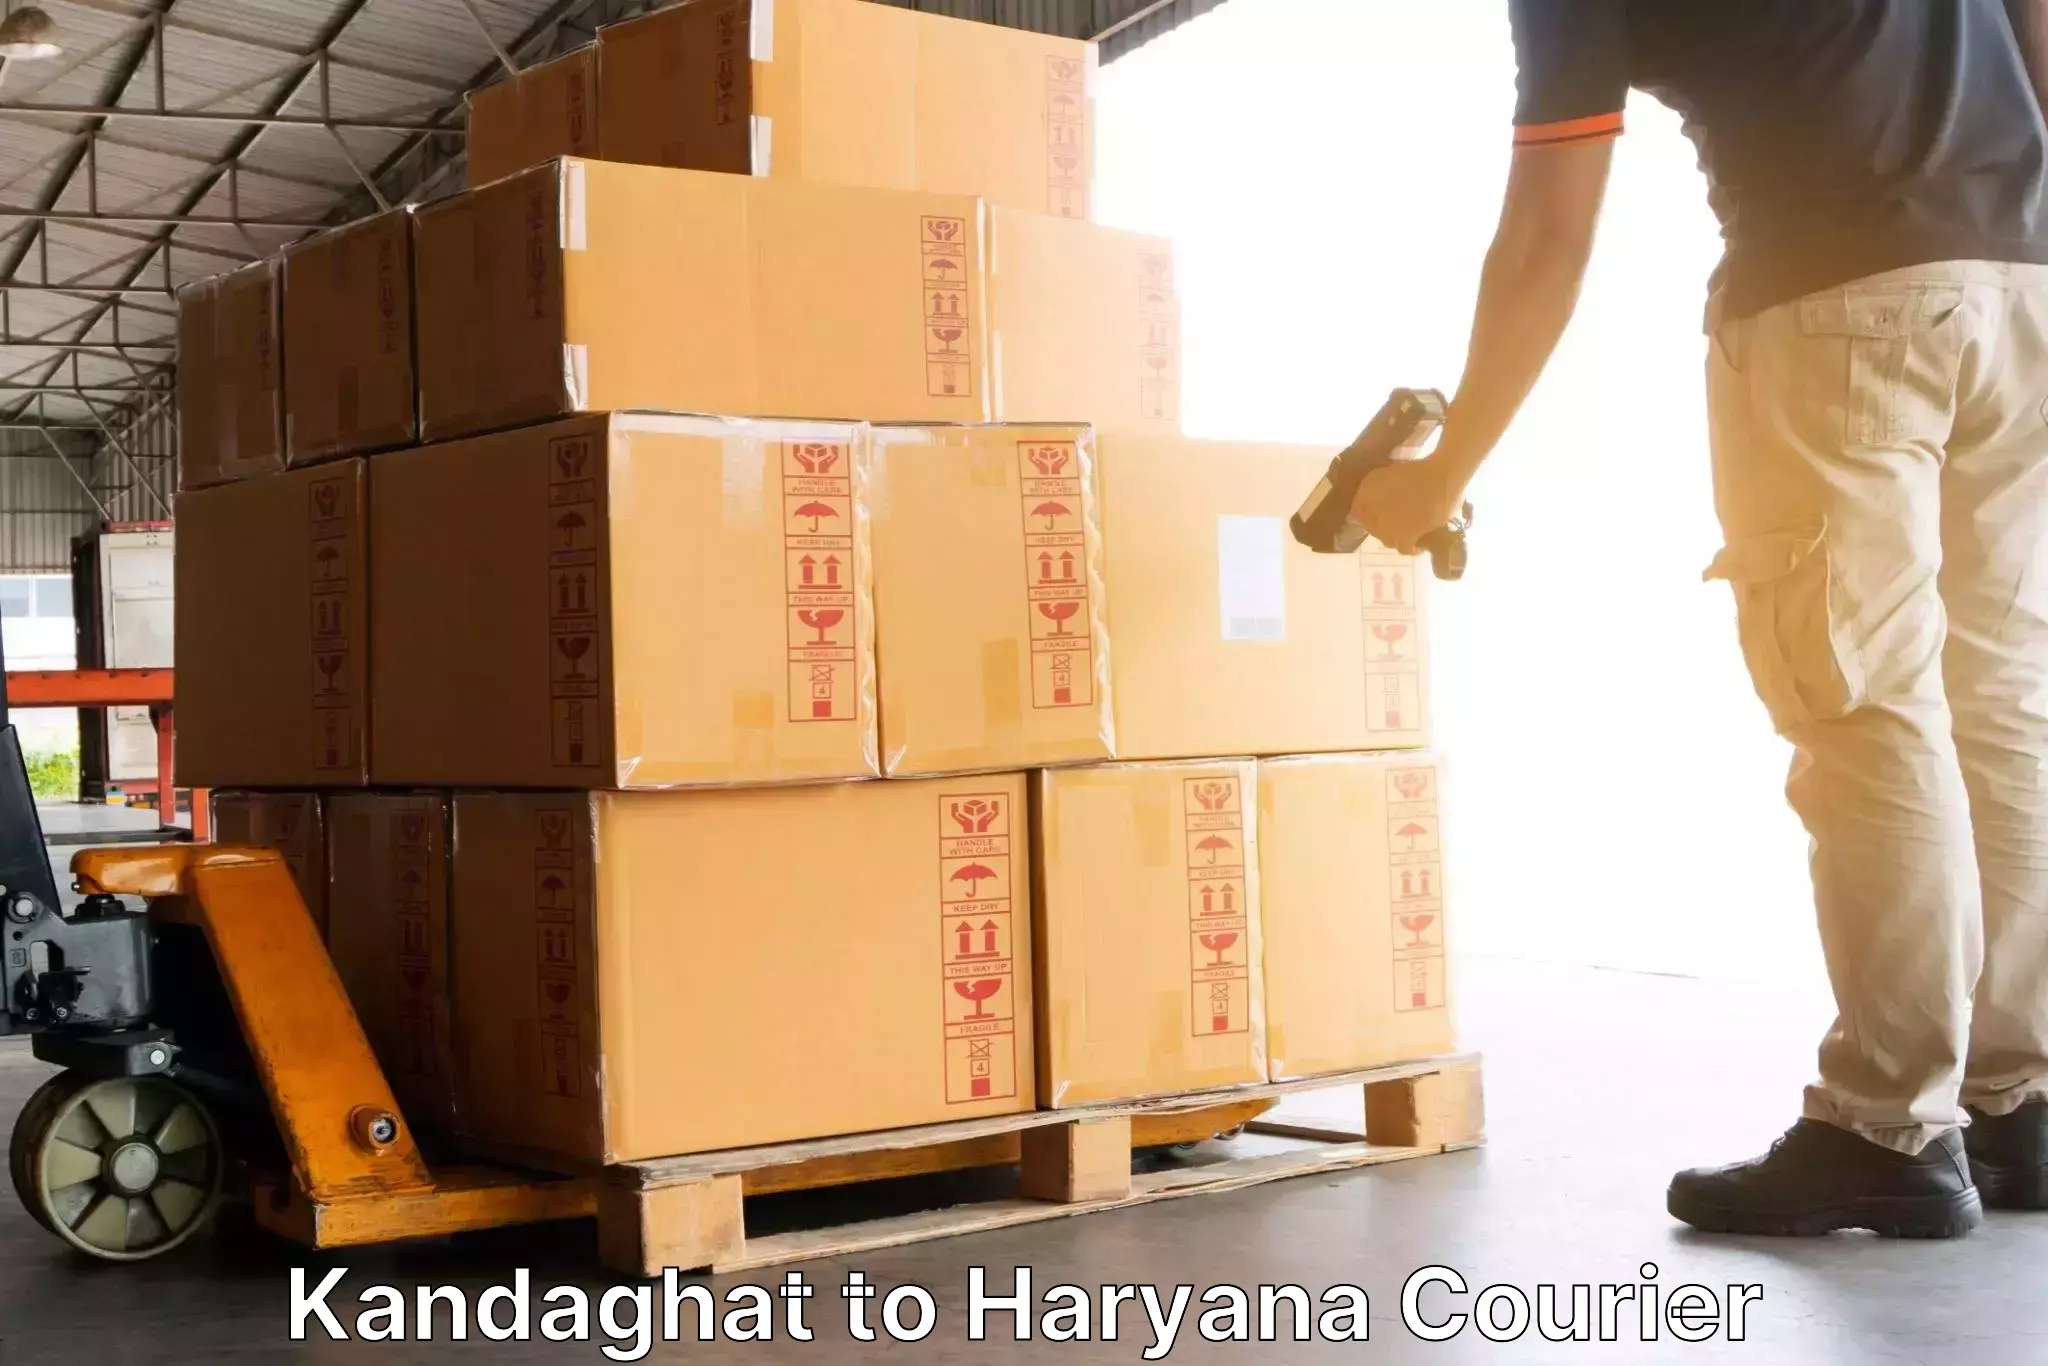 Urgent courier needs Kandaghat to Haryana